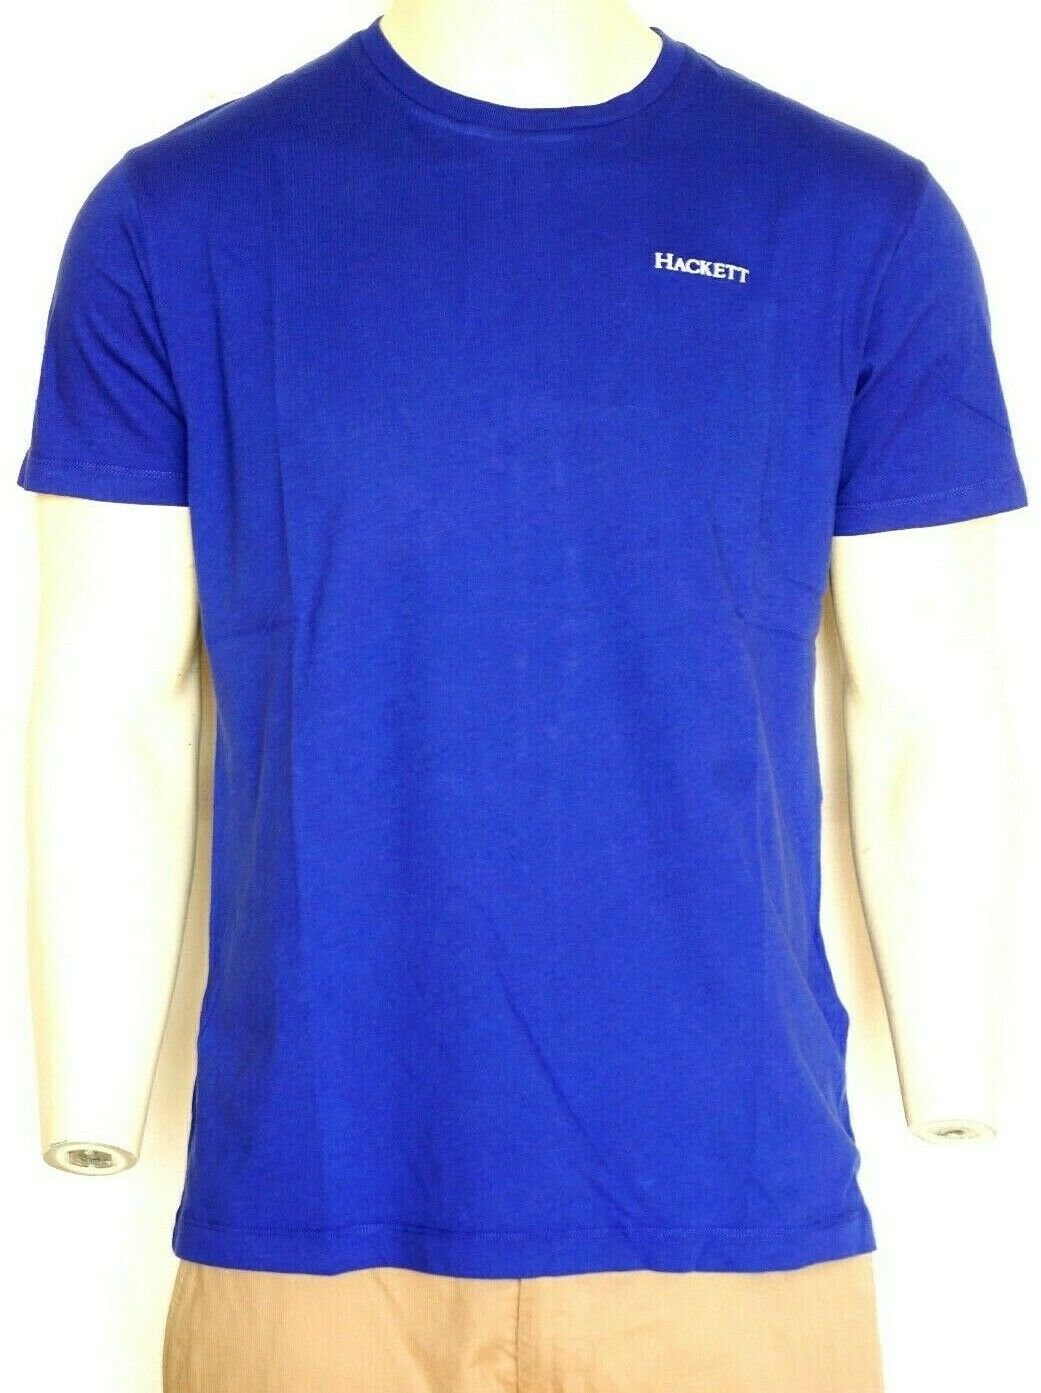 Cup Herren France T-shirts Hackett World Hackett T-Shirt, Herren. T-Shirt Blau Hacket